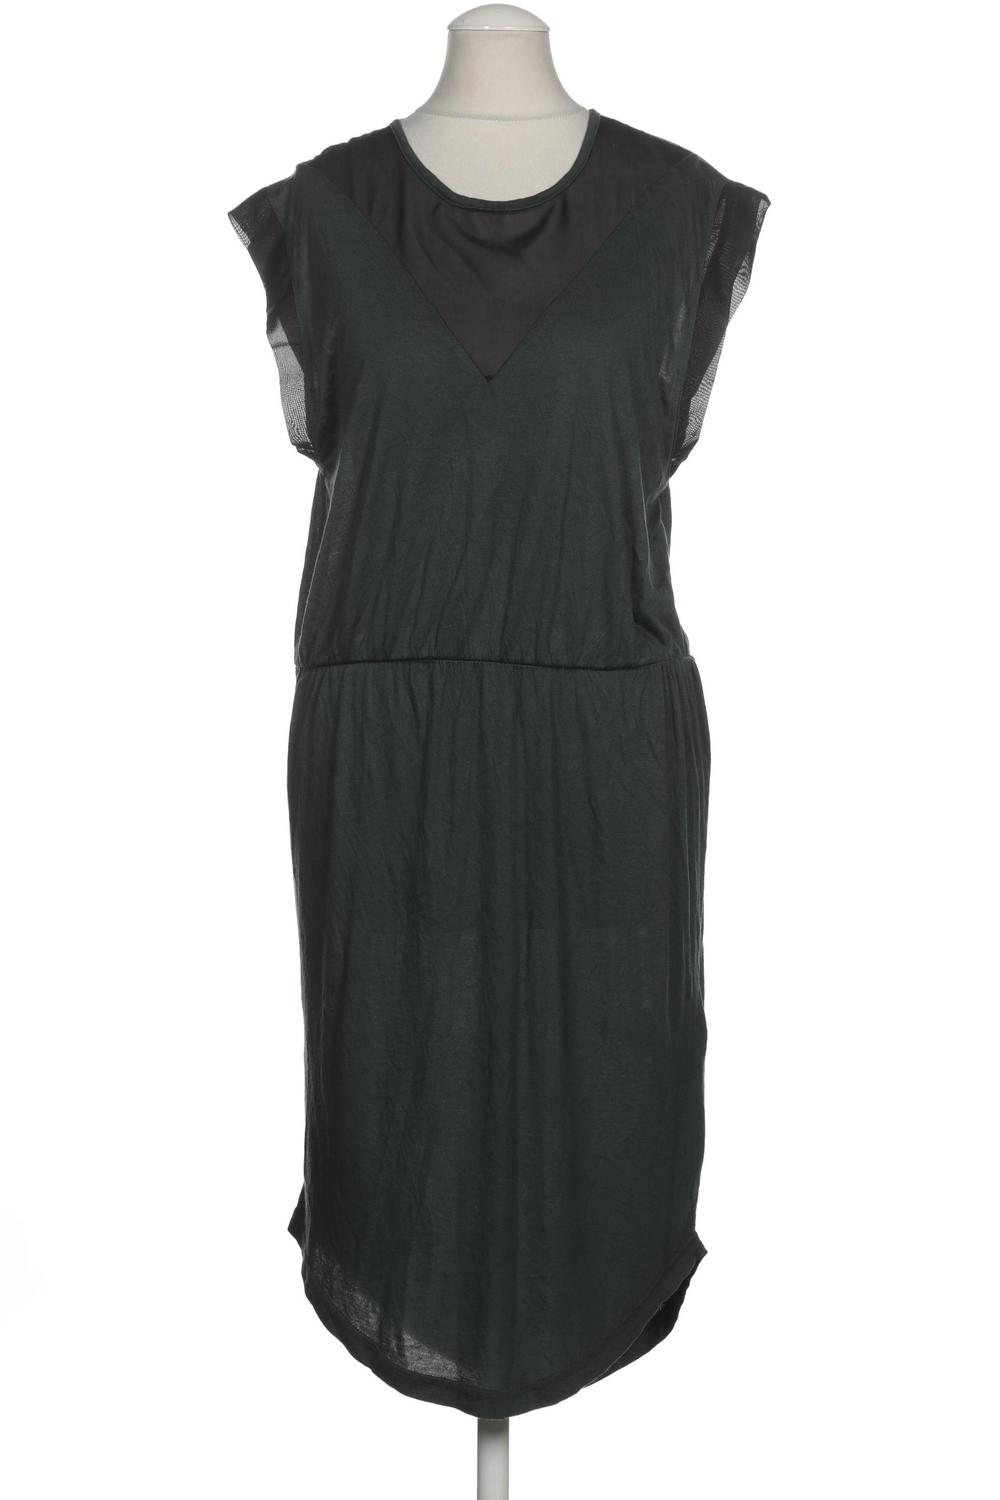 mint & berry Damen Kleid INT S Second Hand kaufen | momox ...